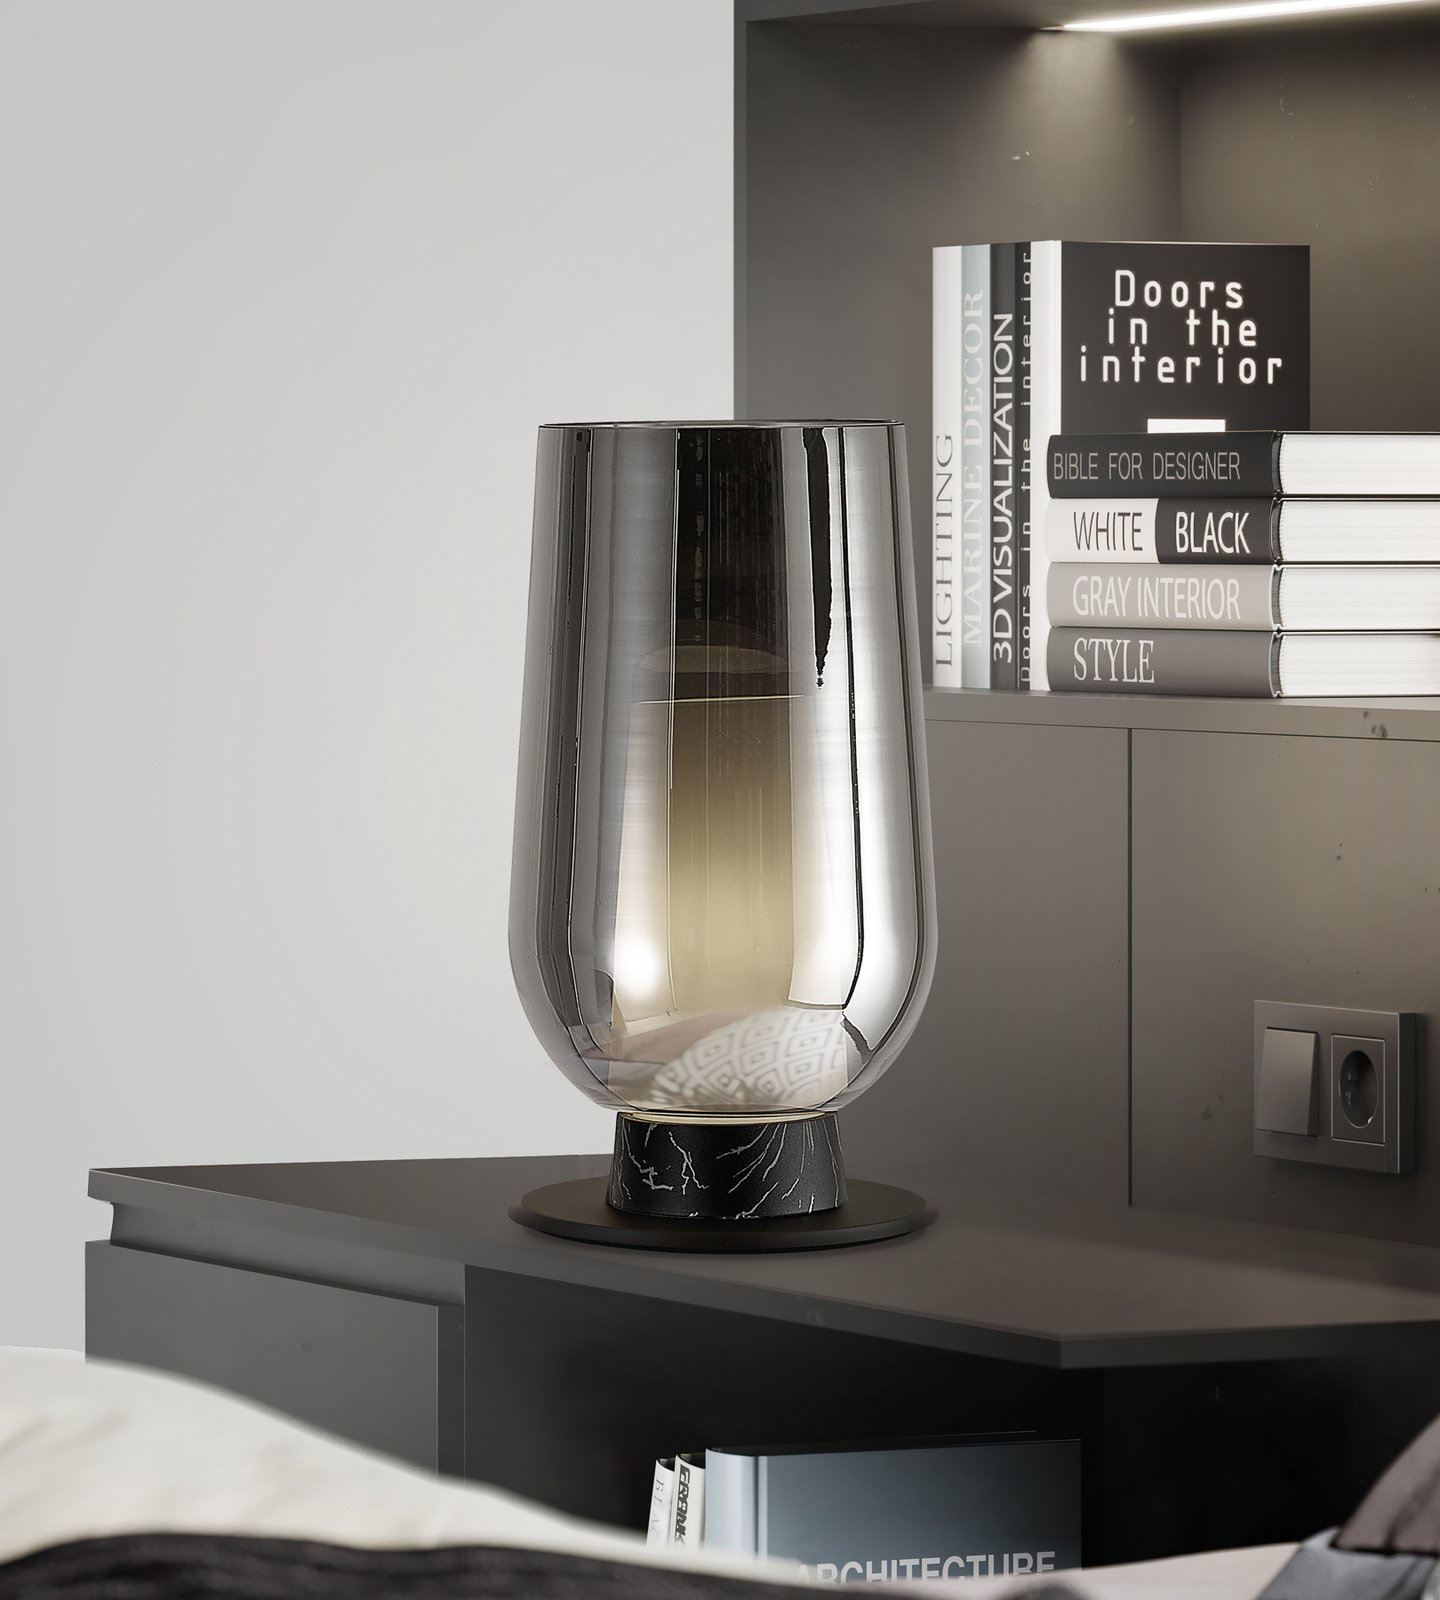 Nora bordslampa, svart-krom, höjd 33 cm, glas, metall